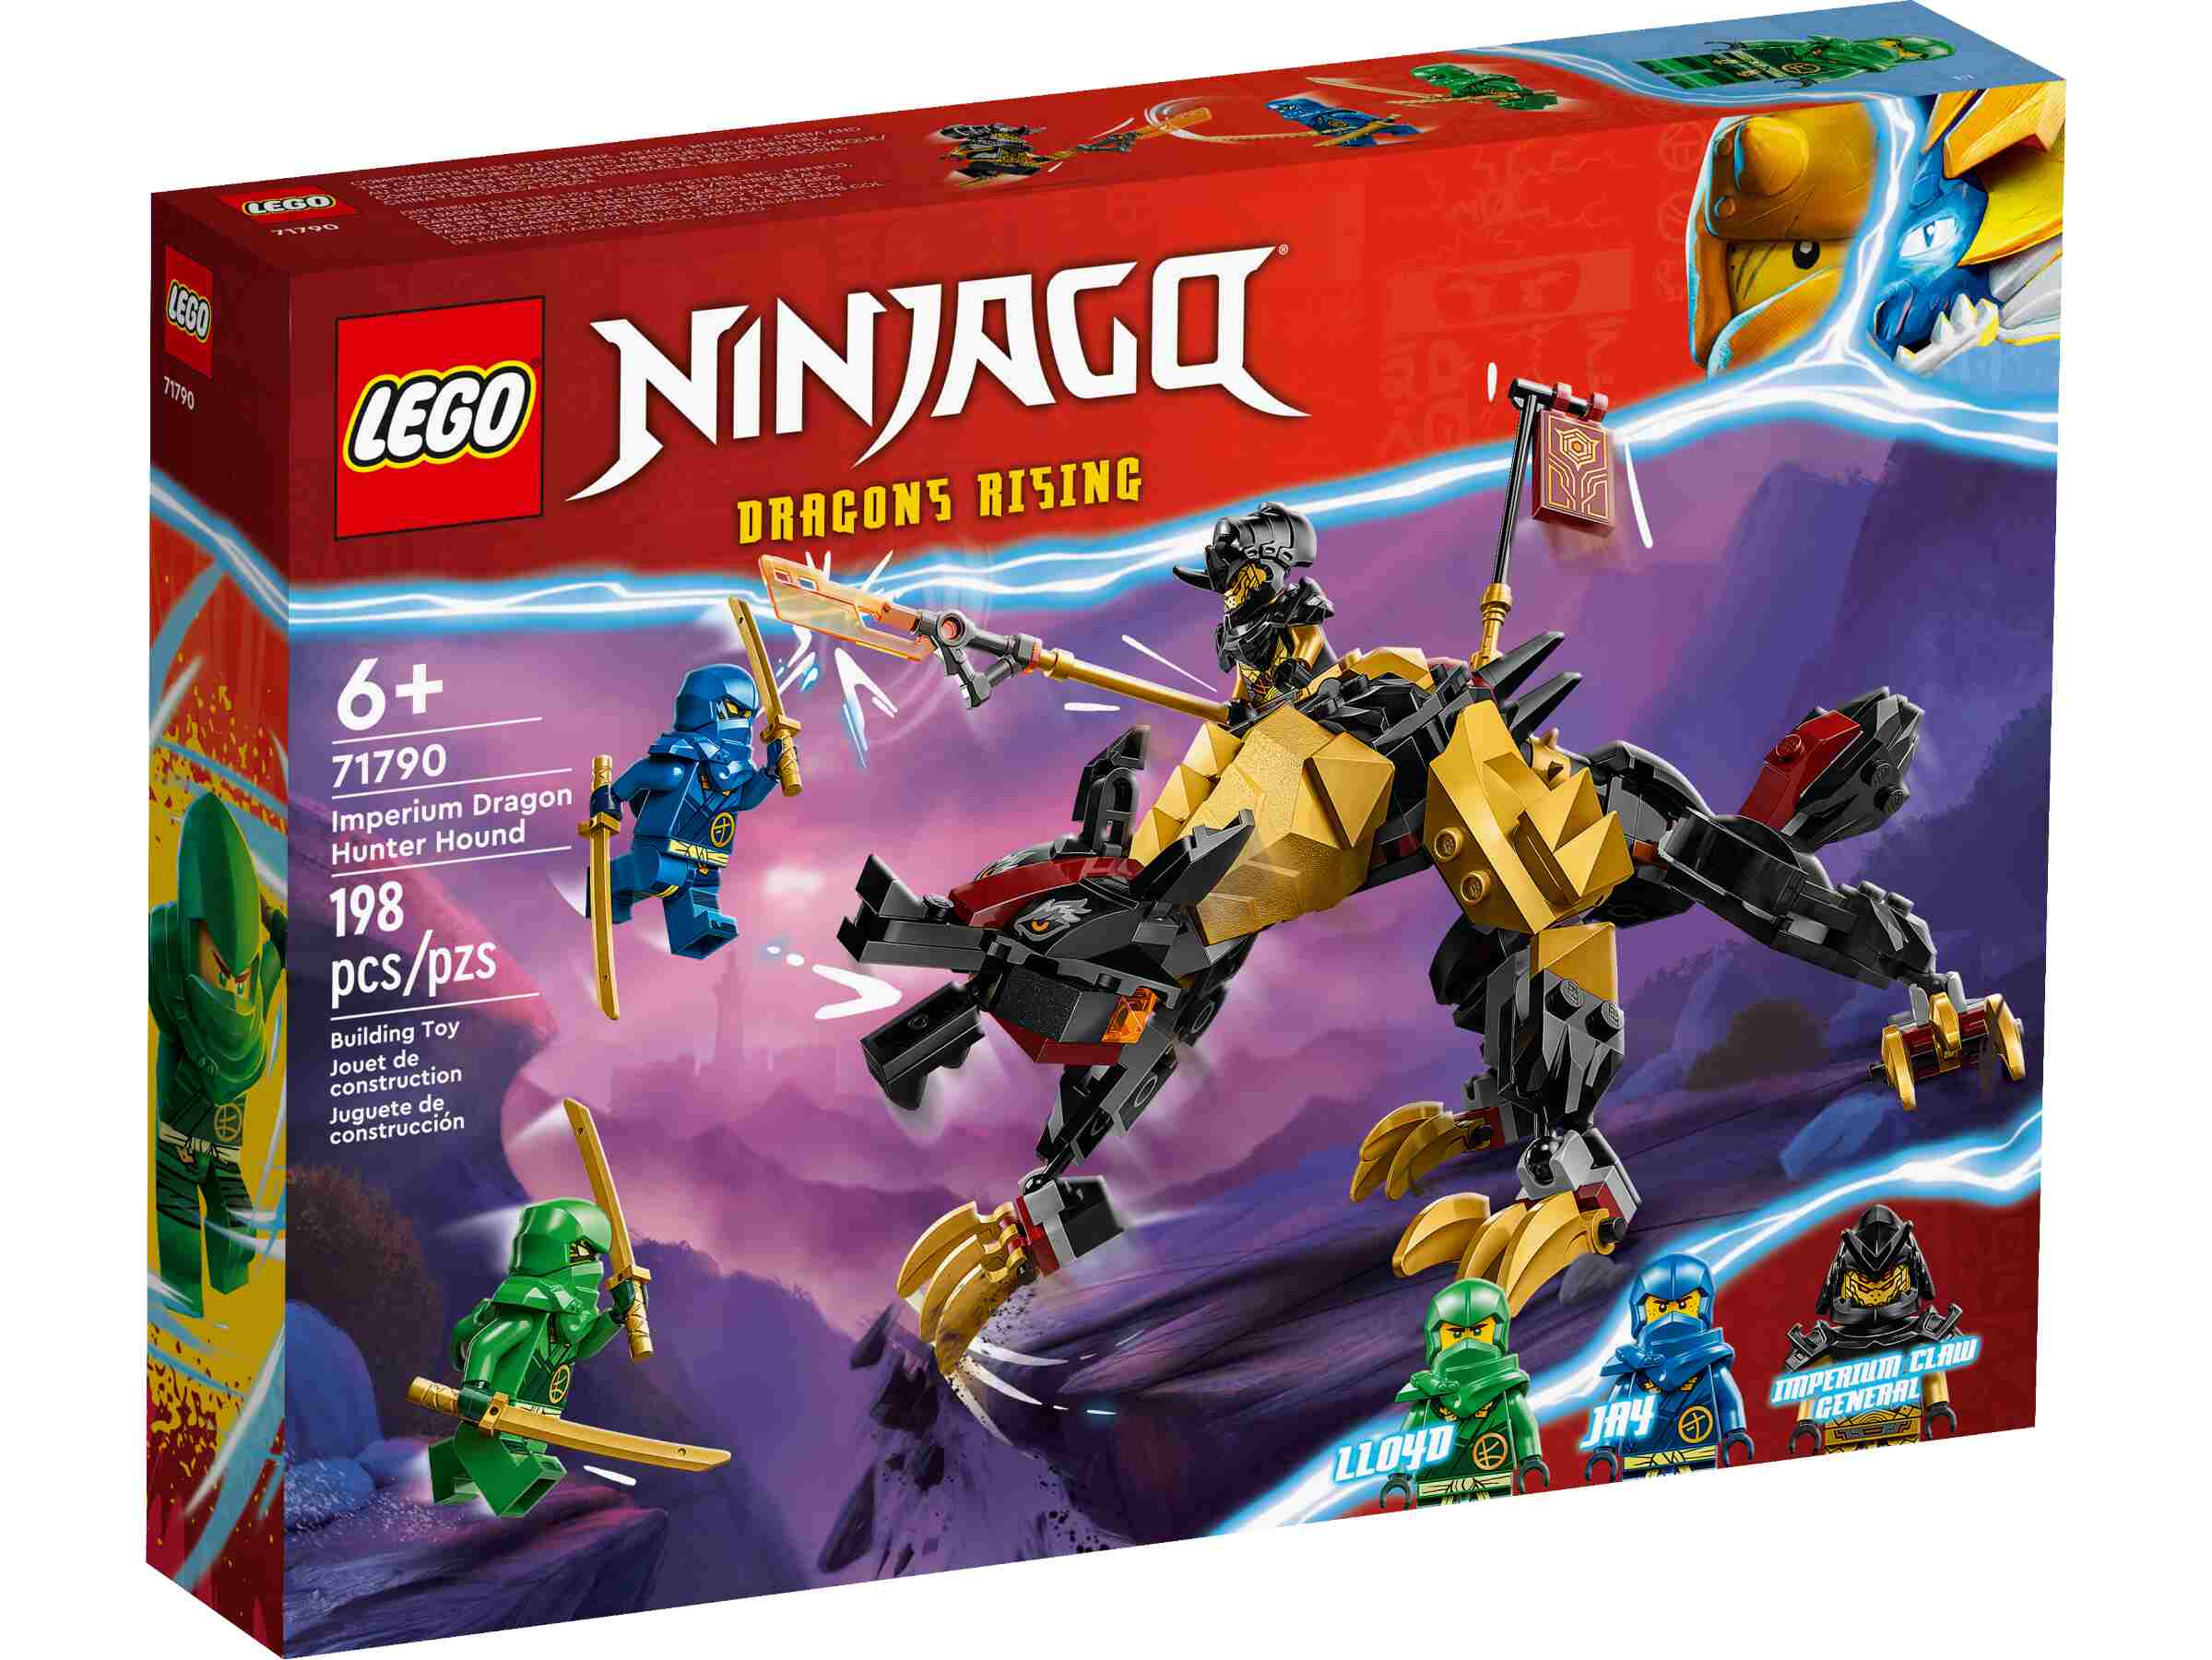 LEGO 71790 NINJAGO Jagdhund des kaiserlichen Drachenjägers, 3 Minifiuren